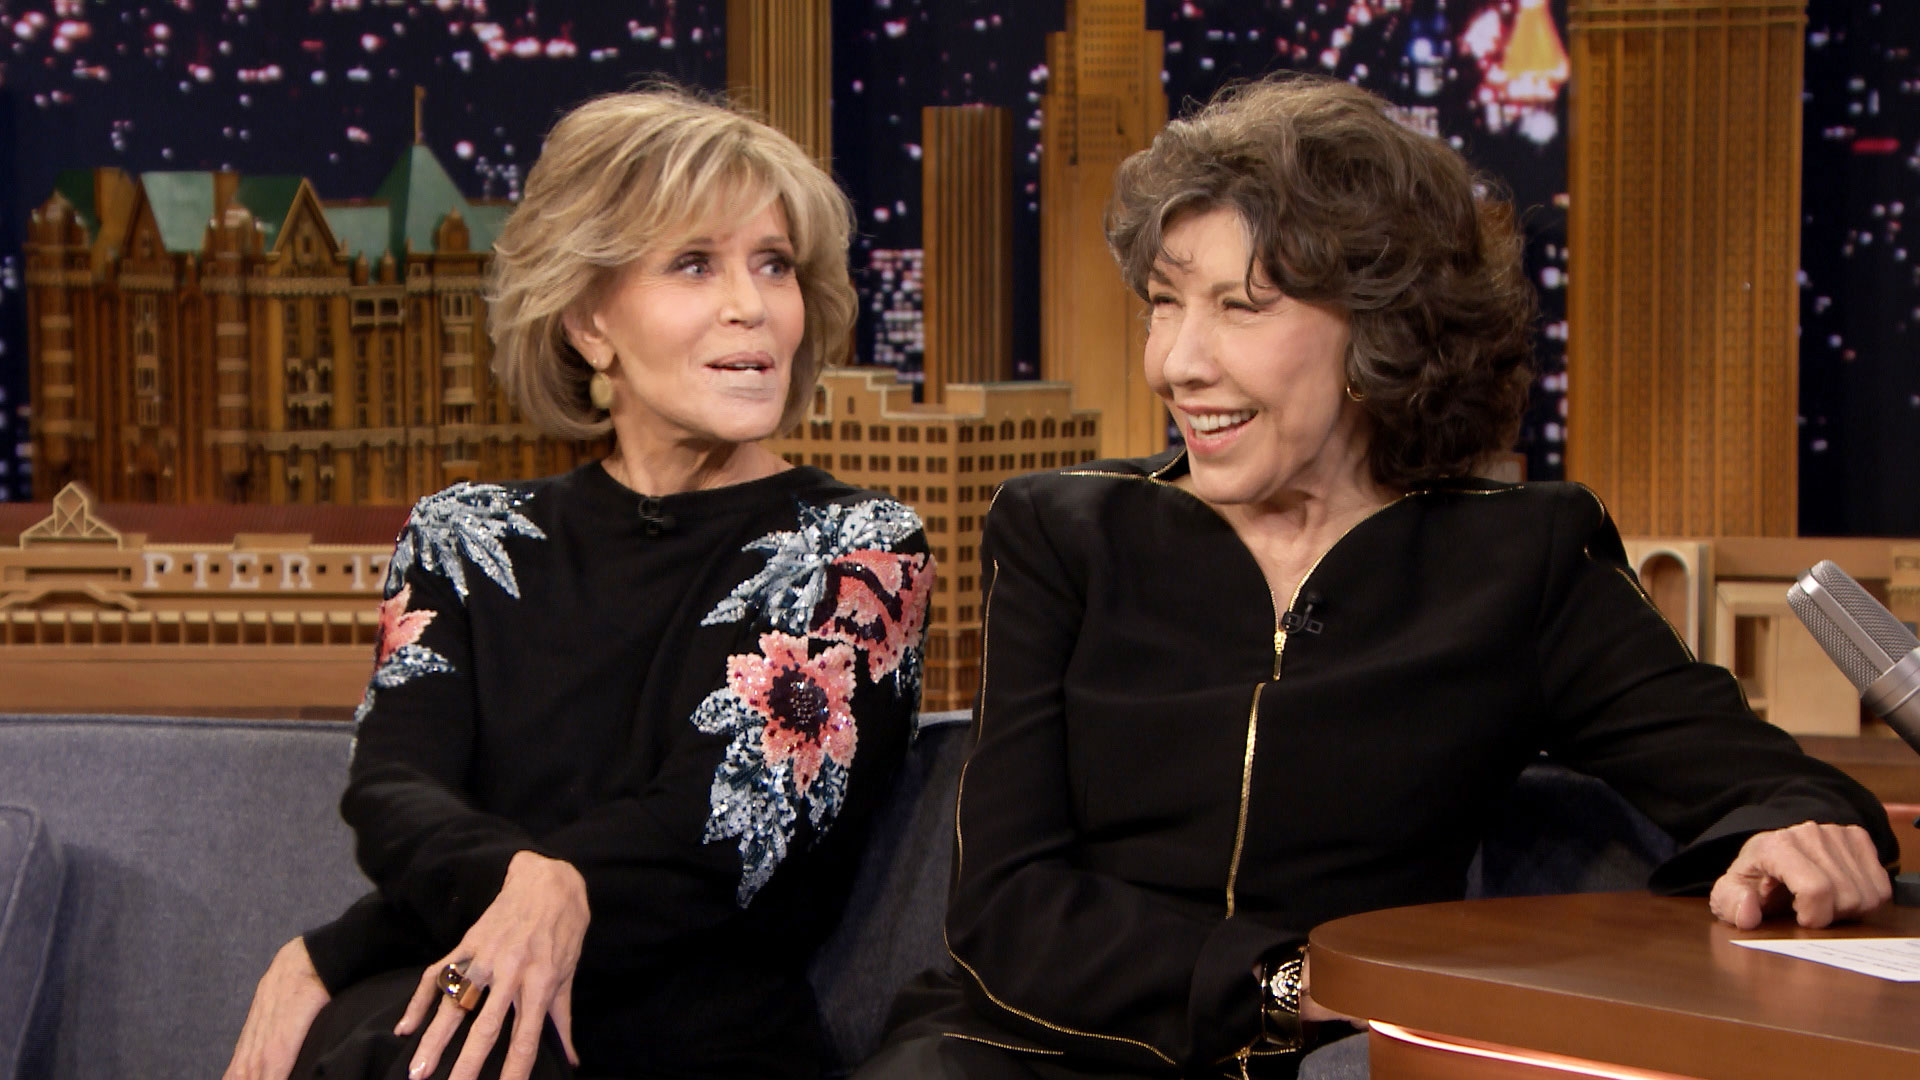 Watch The Tonight Show Starring Jimmy Fallon Interview: Jane Fonda & Li...